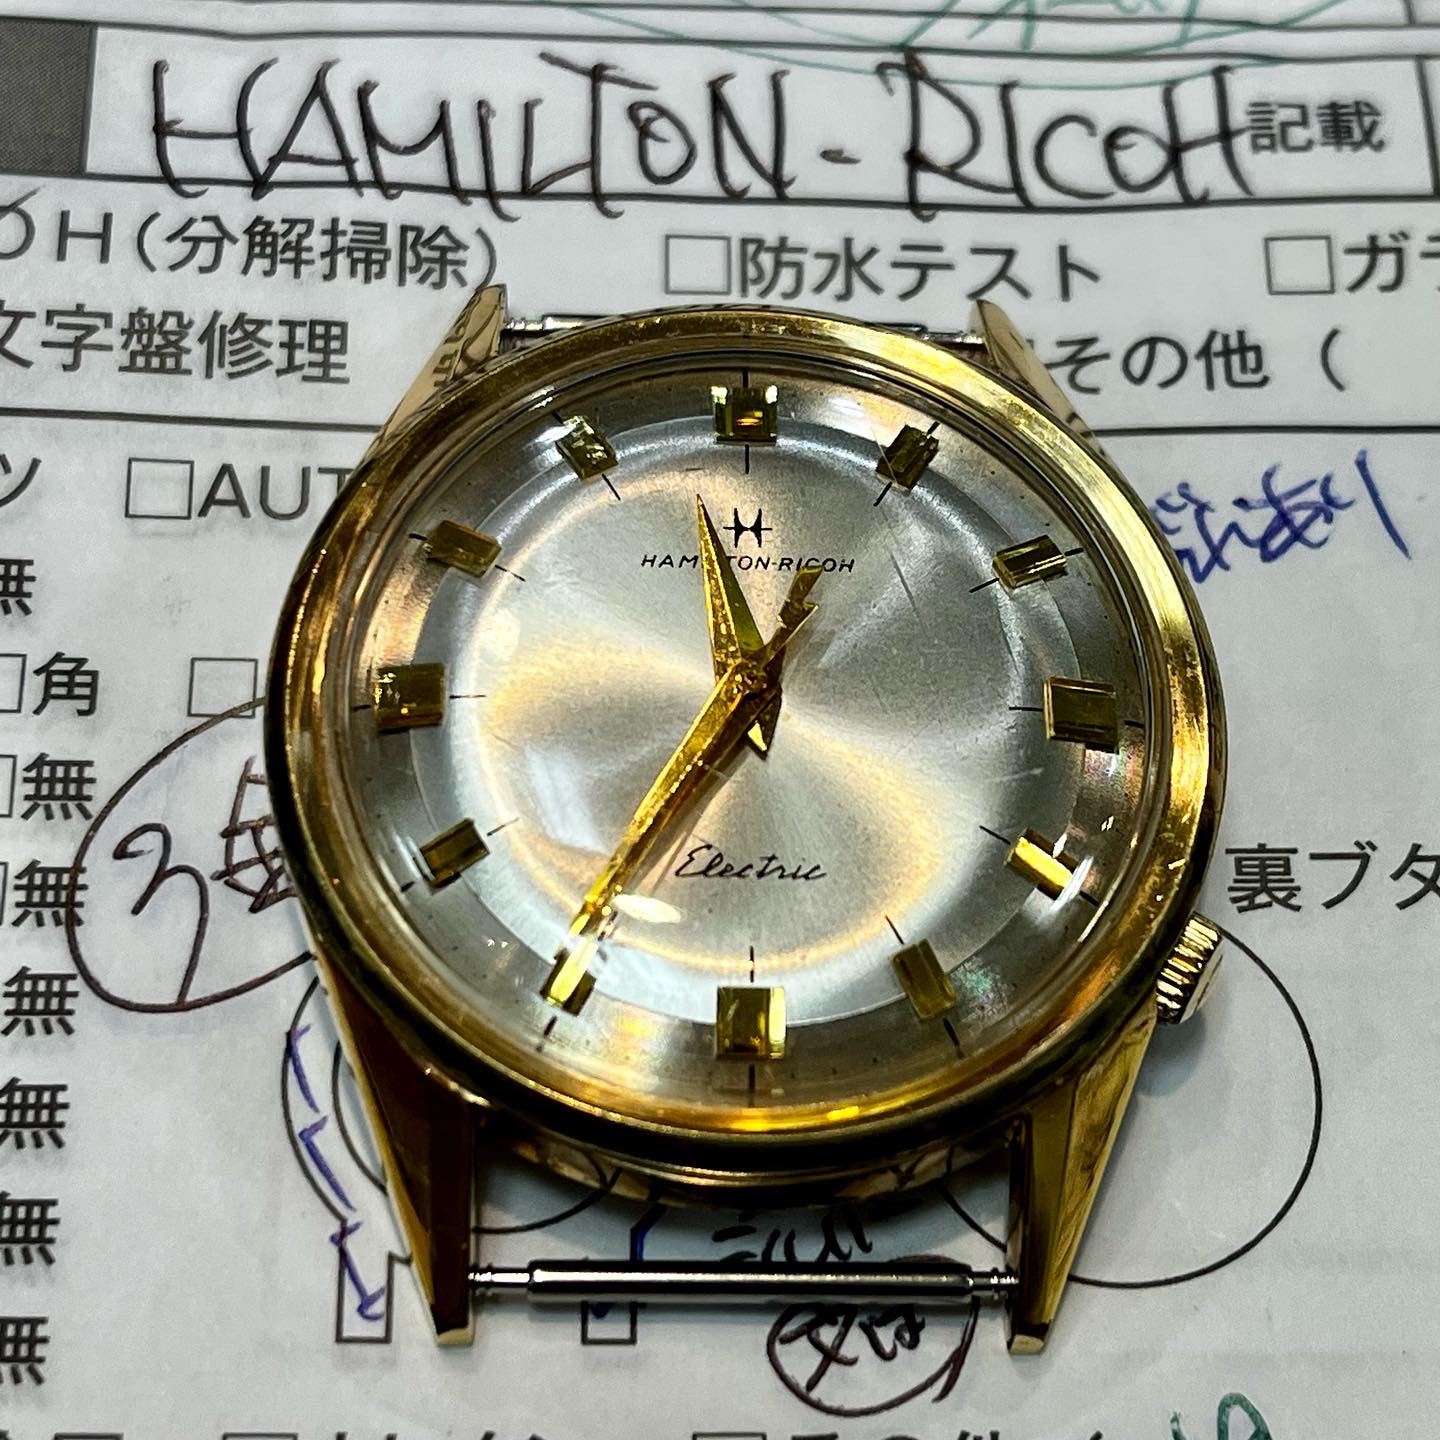 HAMILTON RICOH ハミルトンリコー | 電磁テンプ式時計修理 | 小さな時計屋